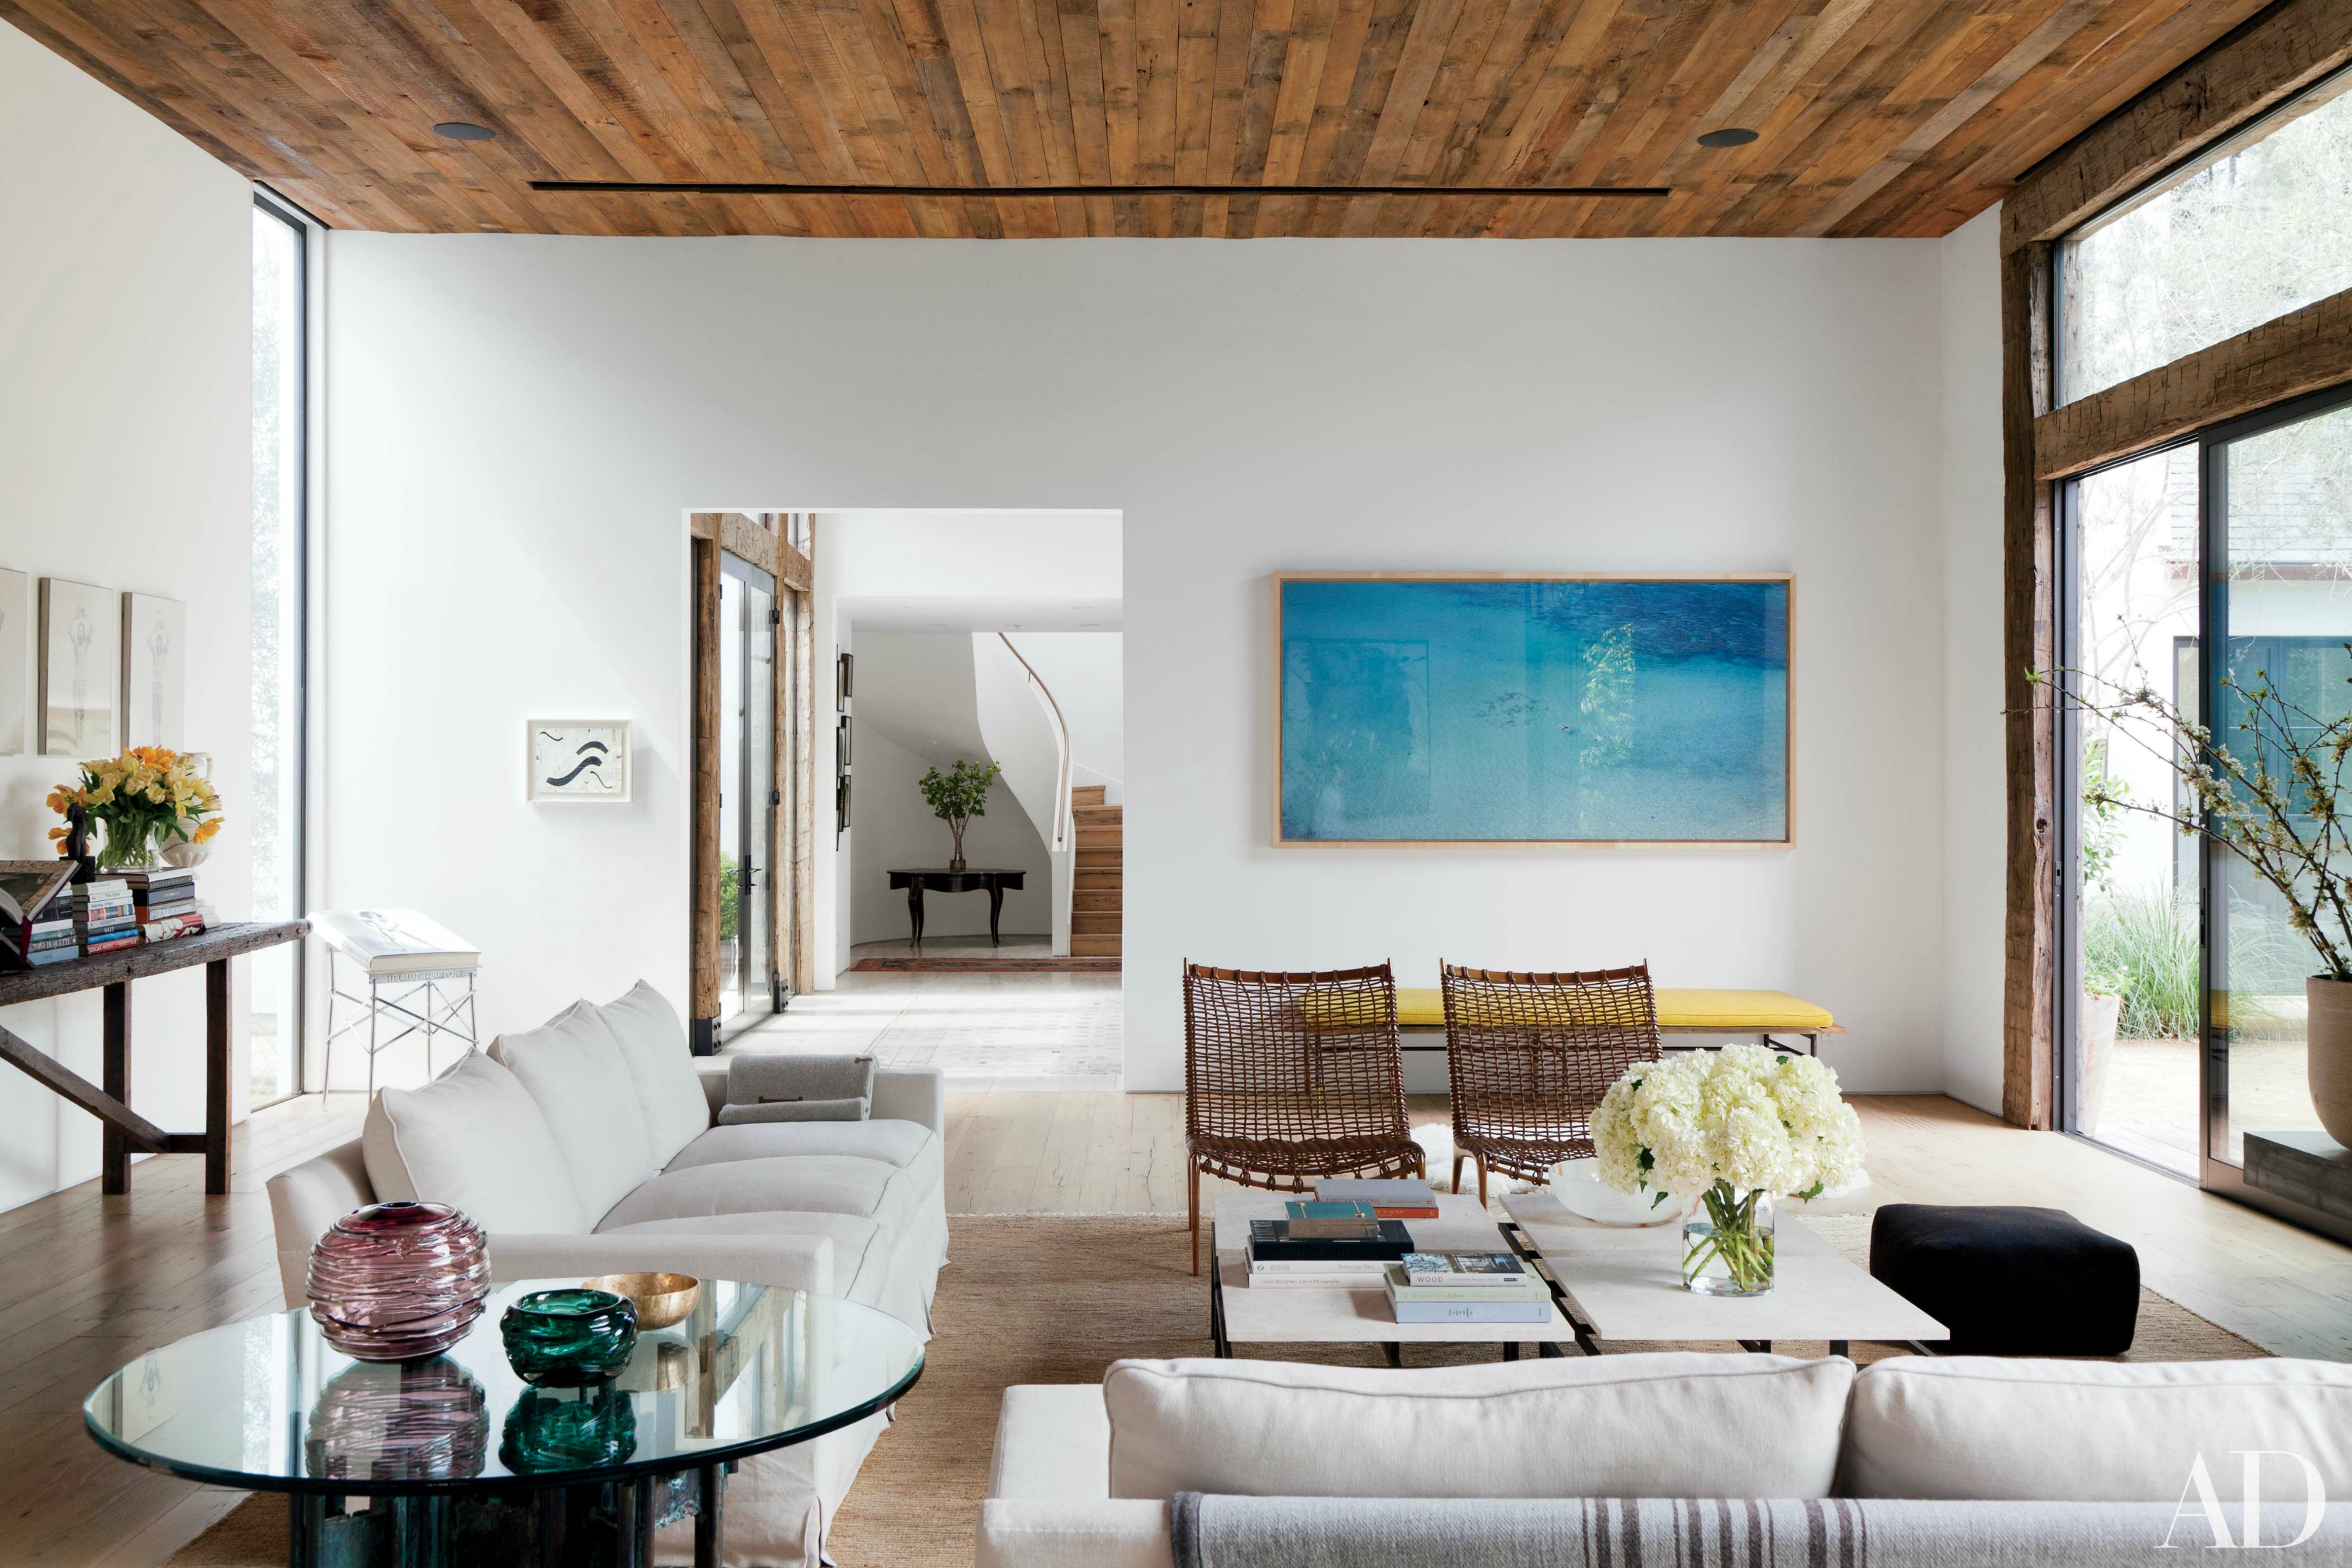 10 Brilliant Living Room Design Ideas With Modern Sofas